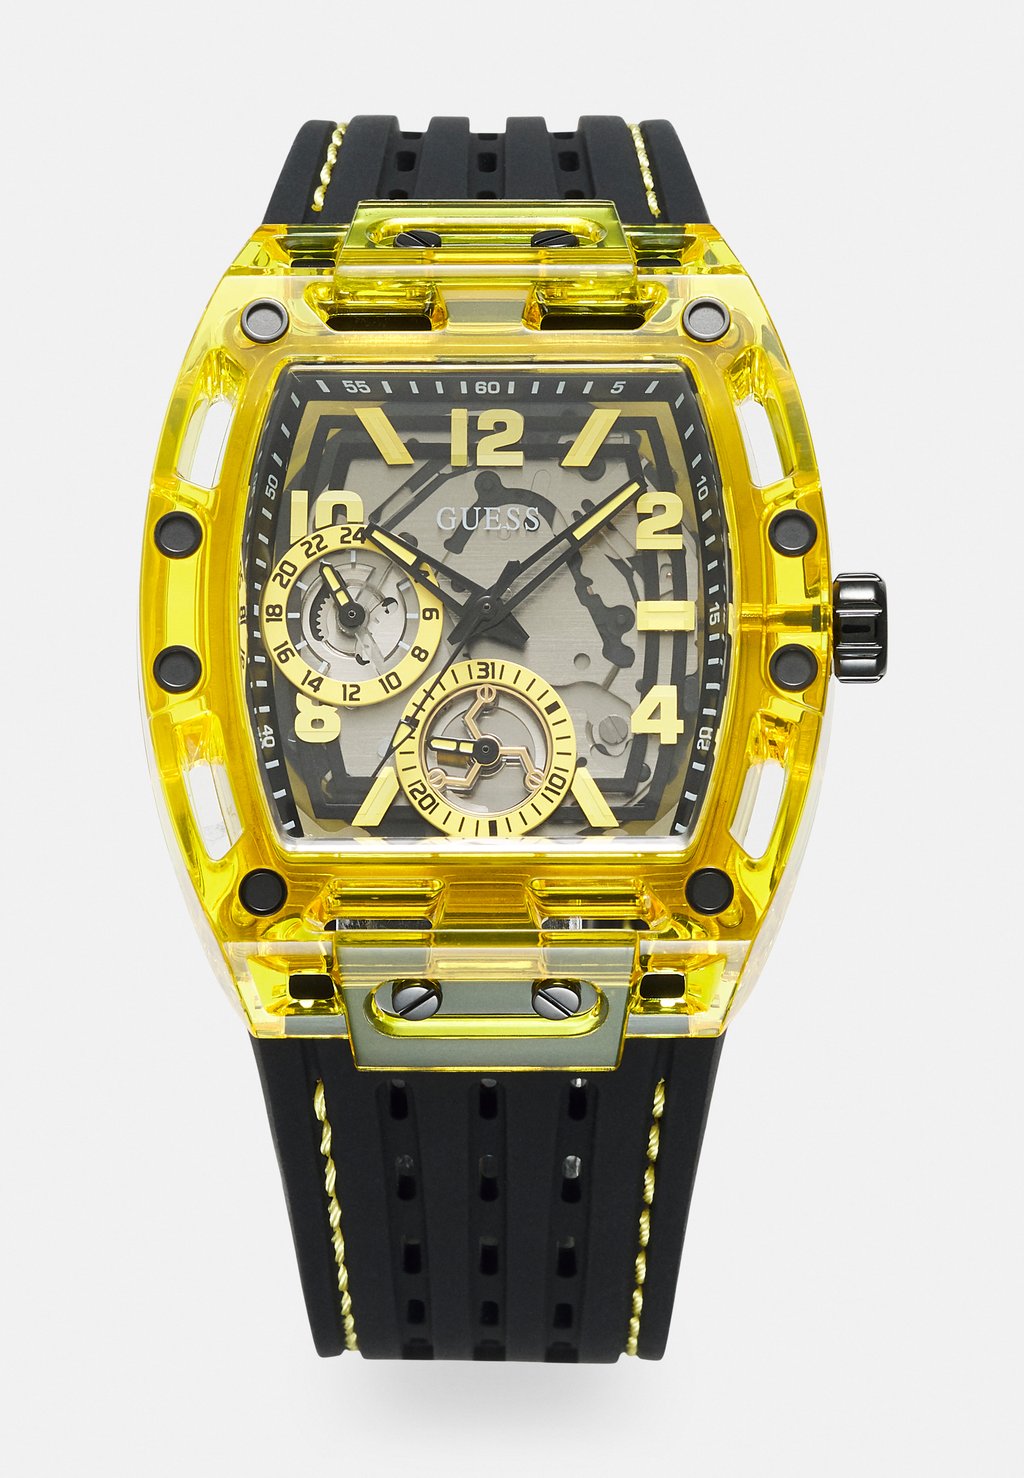 Часы Phoenix Guess, цвет black matte/yellow цена и фото